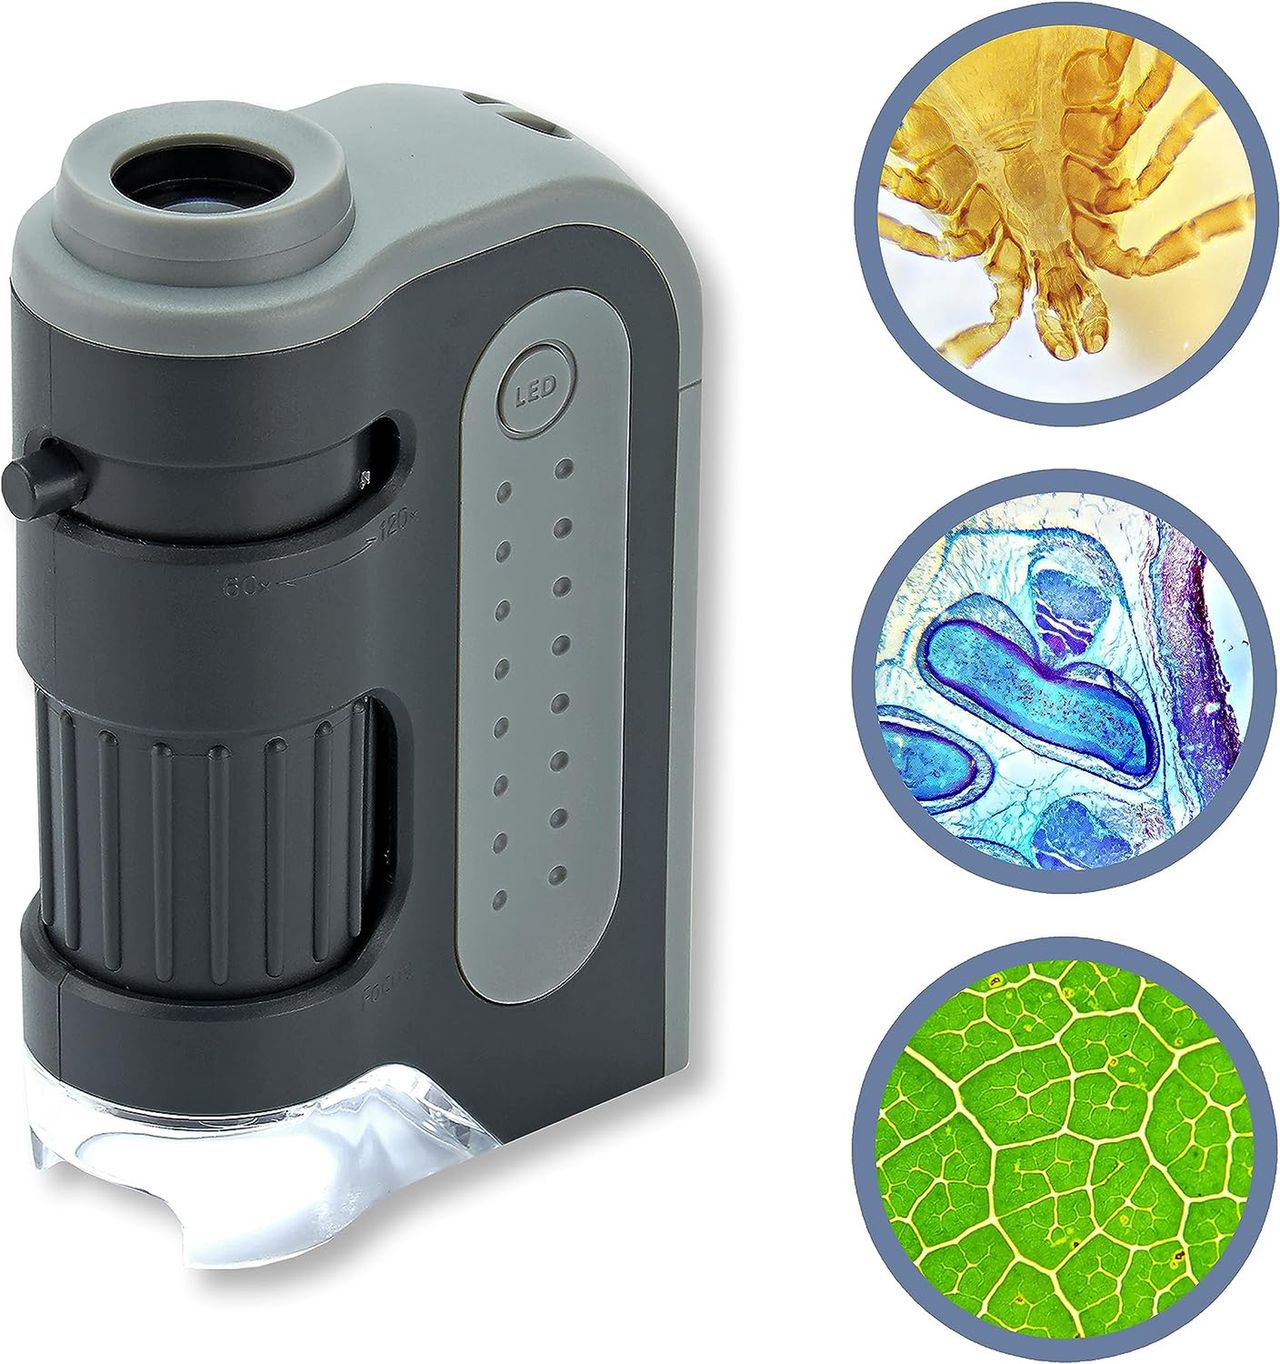 Carson MicroBrite Plus 60x-120x LED Lighted Pocket Microscope
